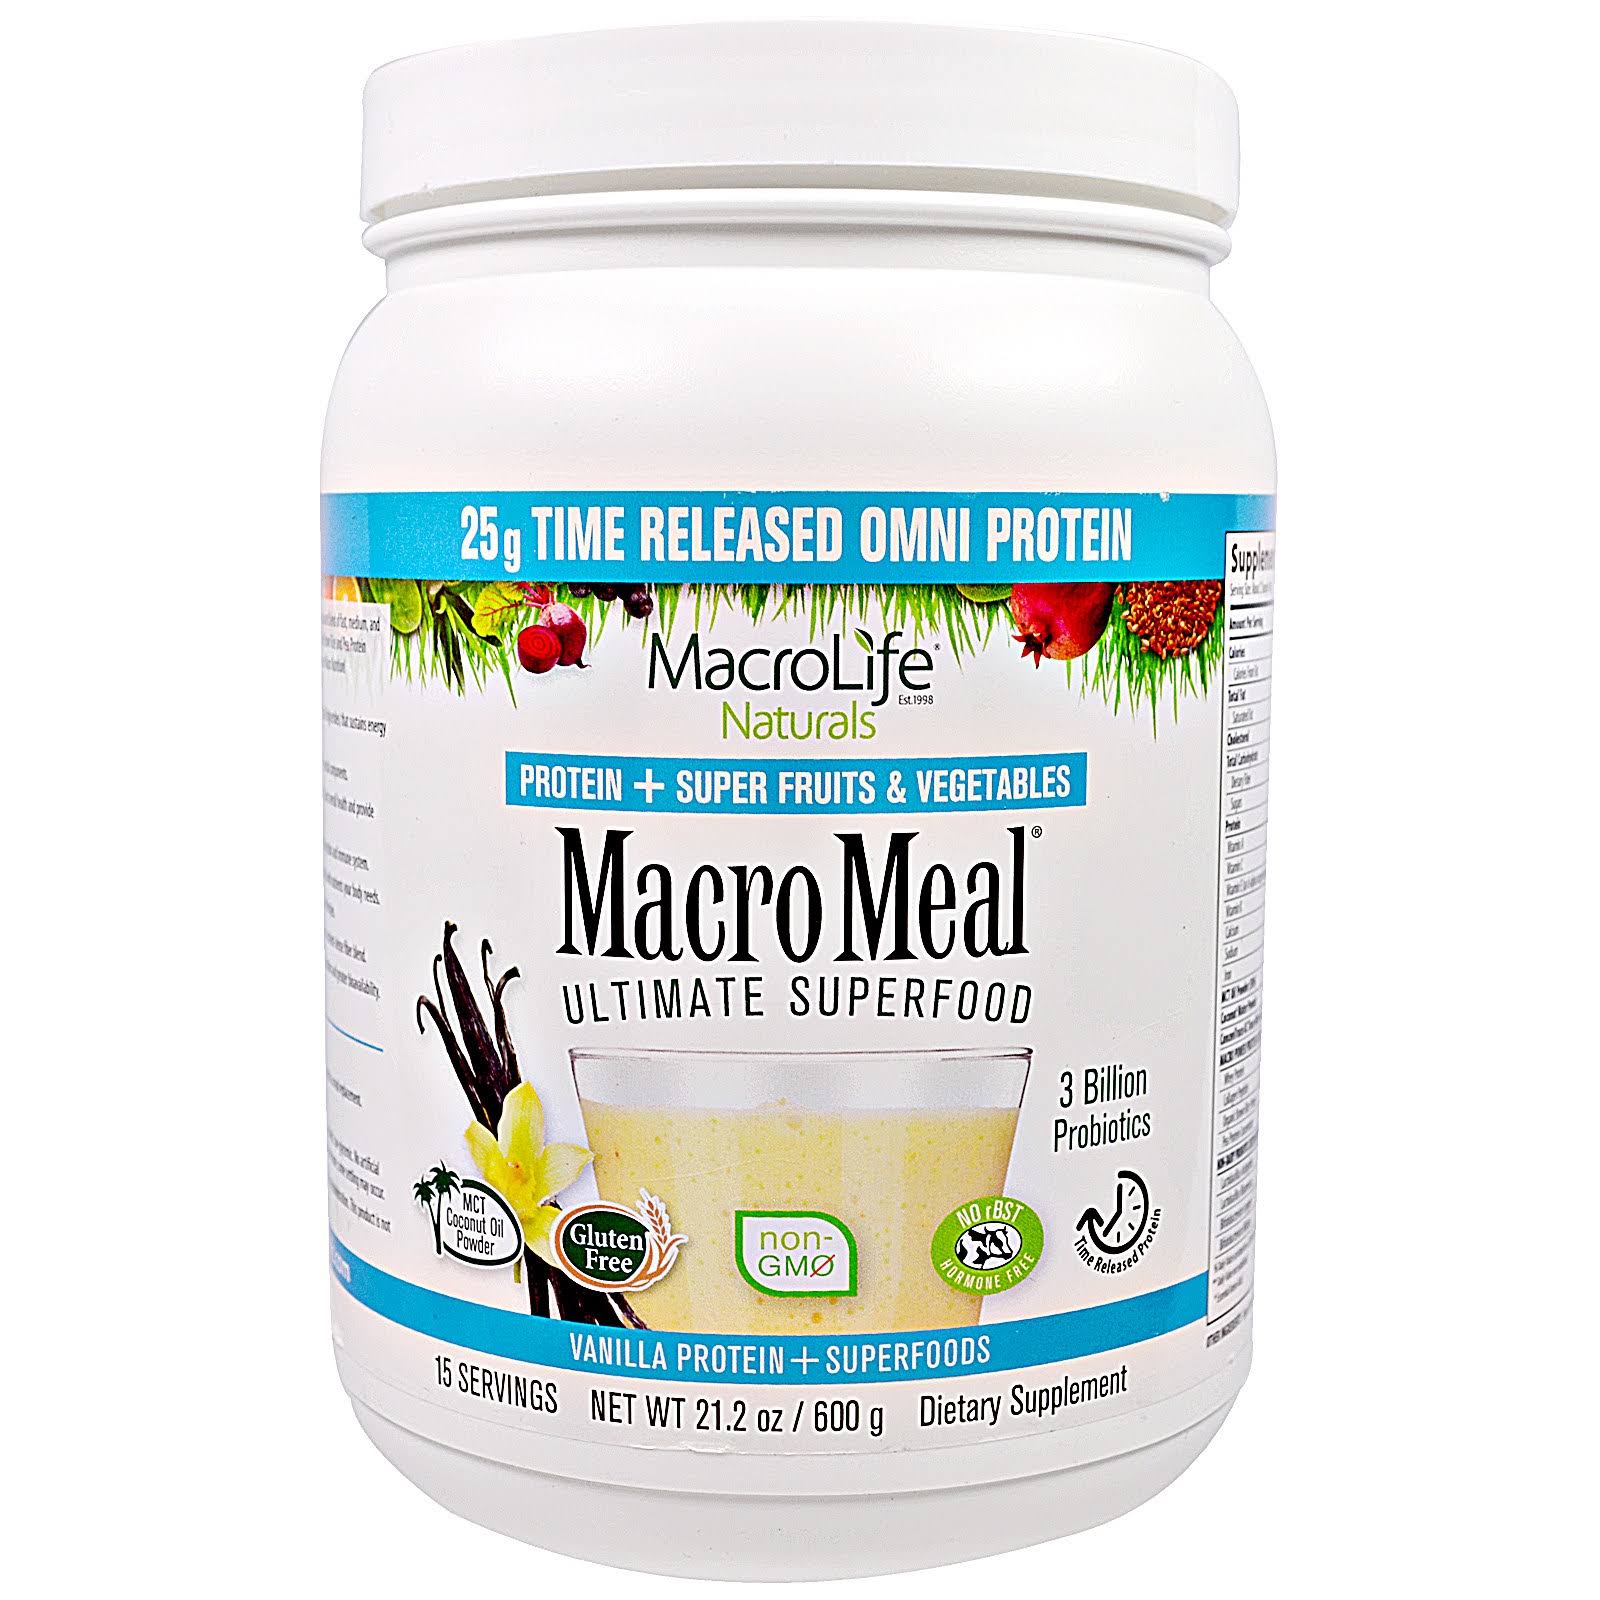 Macrolife Naturals Macro Meal Ultimate Superfood Powder Supplement - Vanilla, 21.2oz